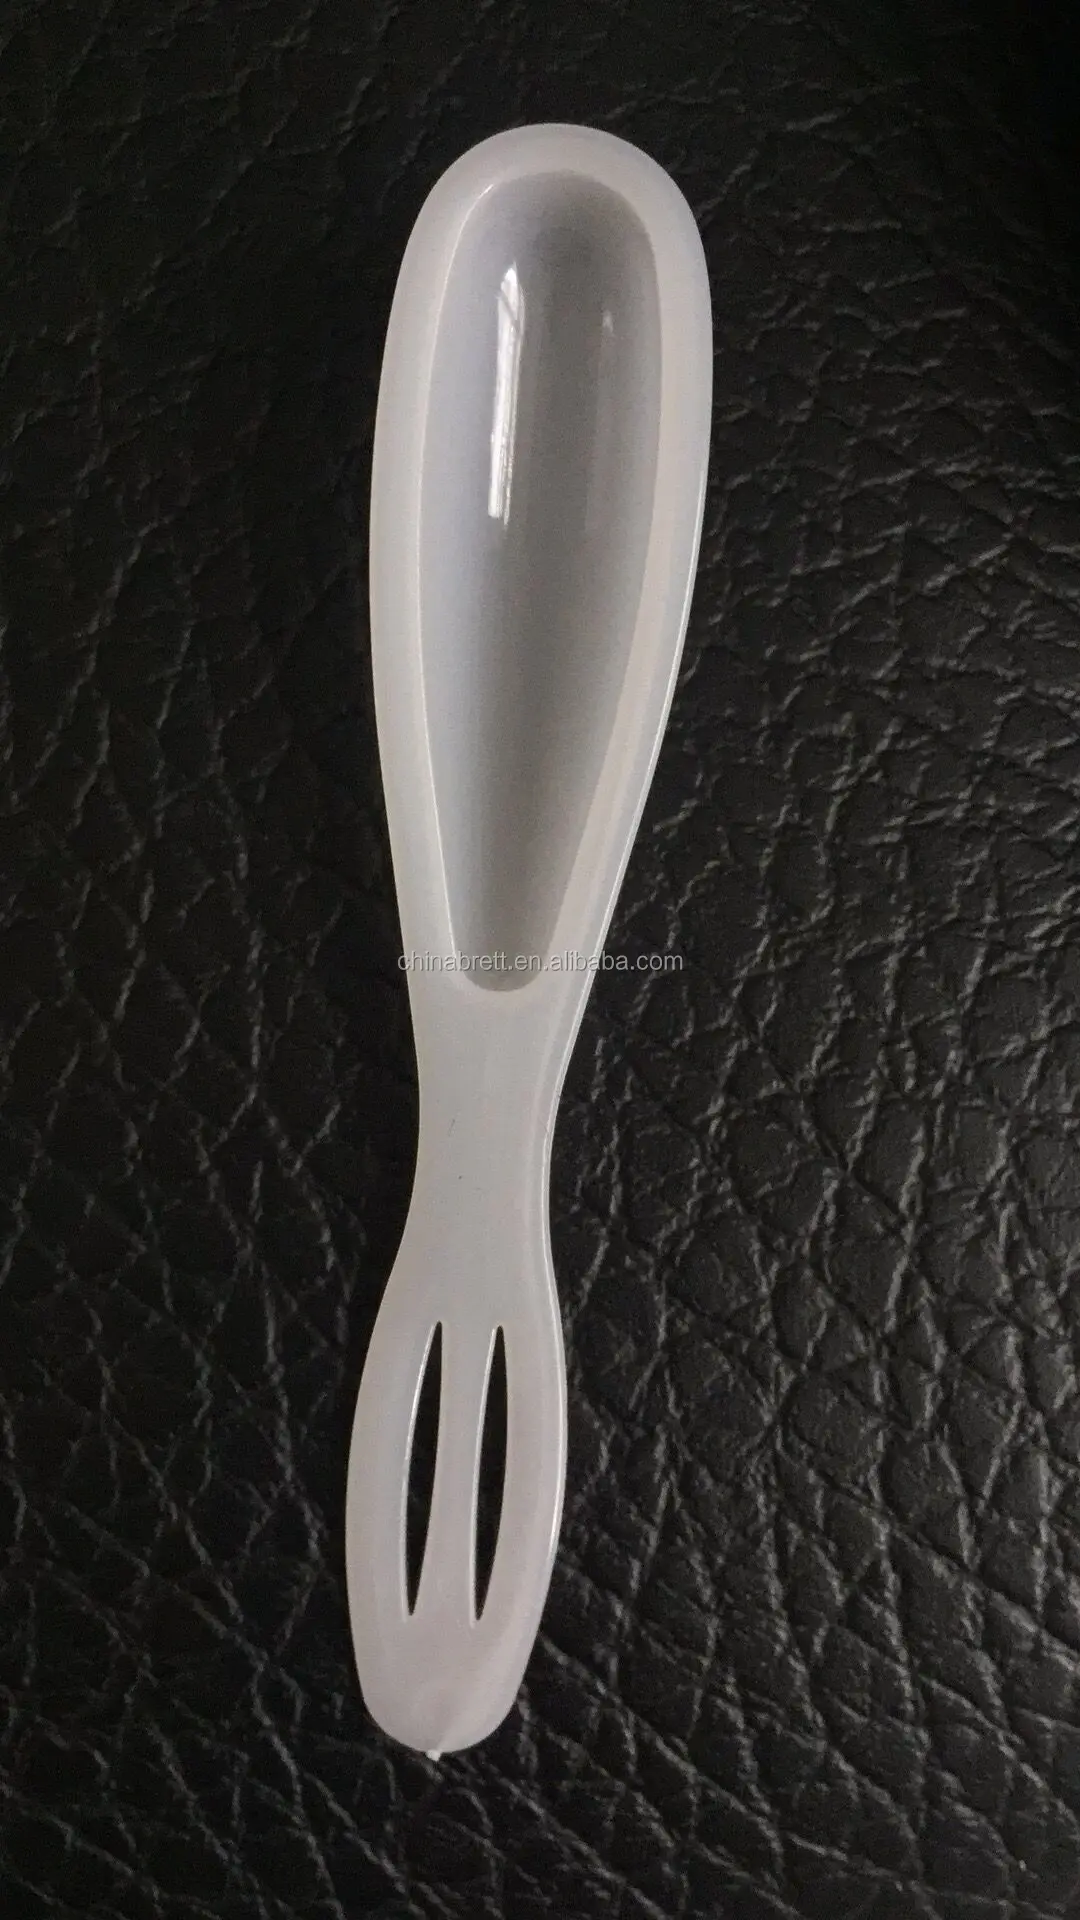 honey spoon plastic1.jpg